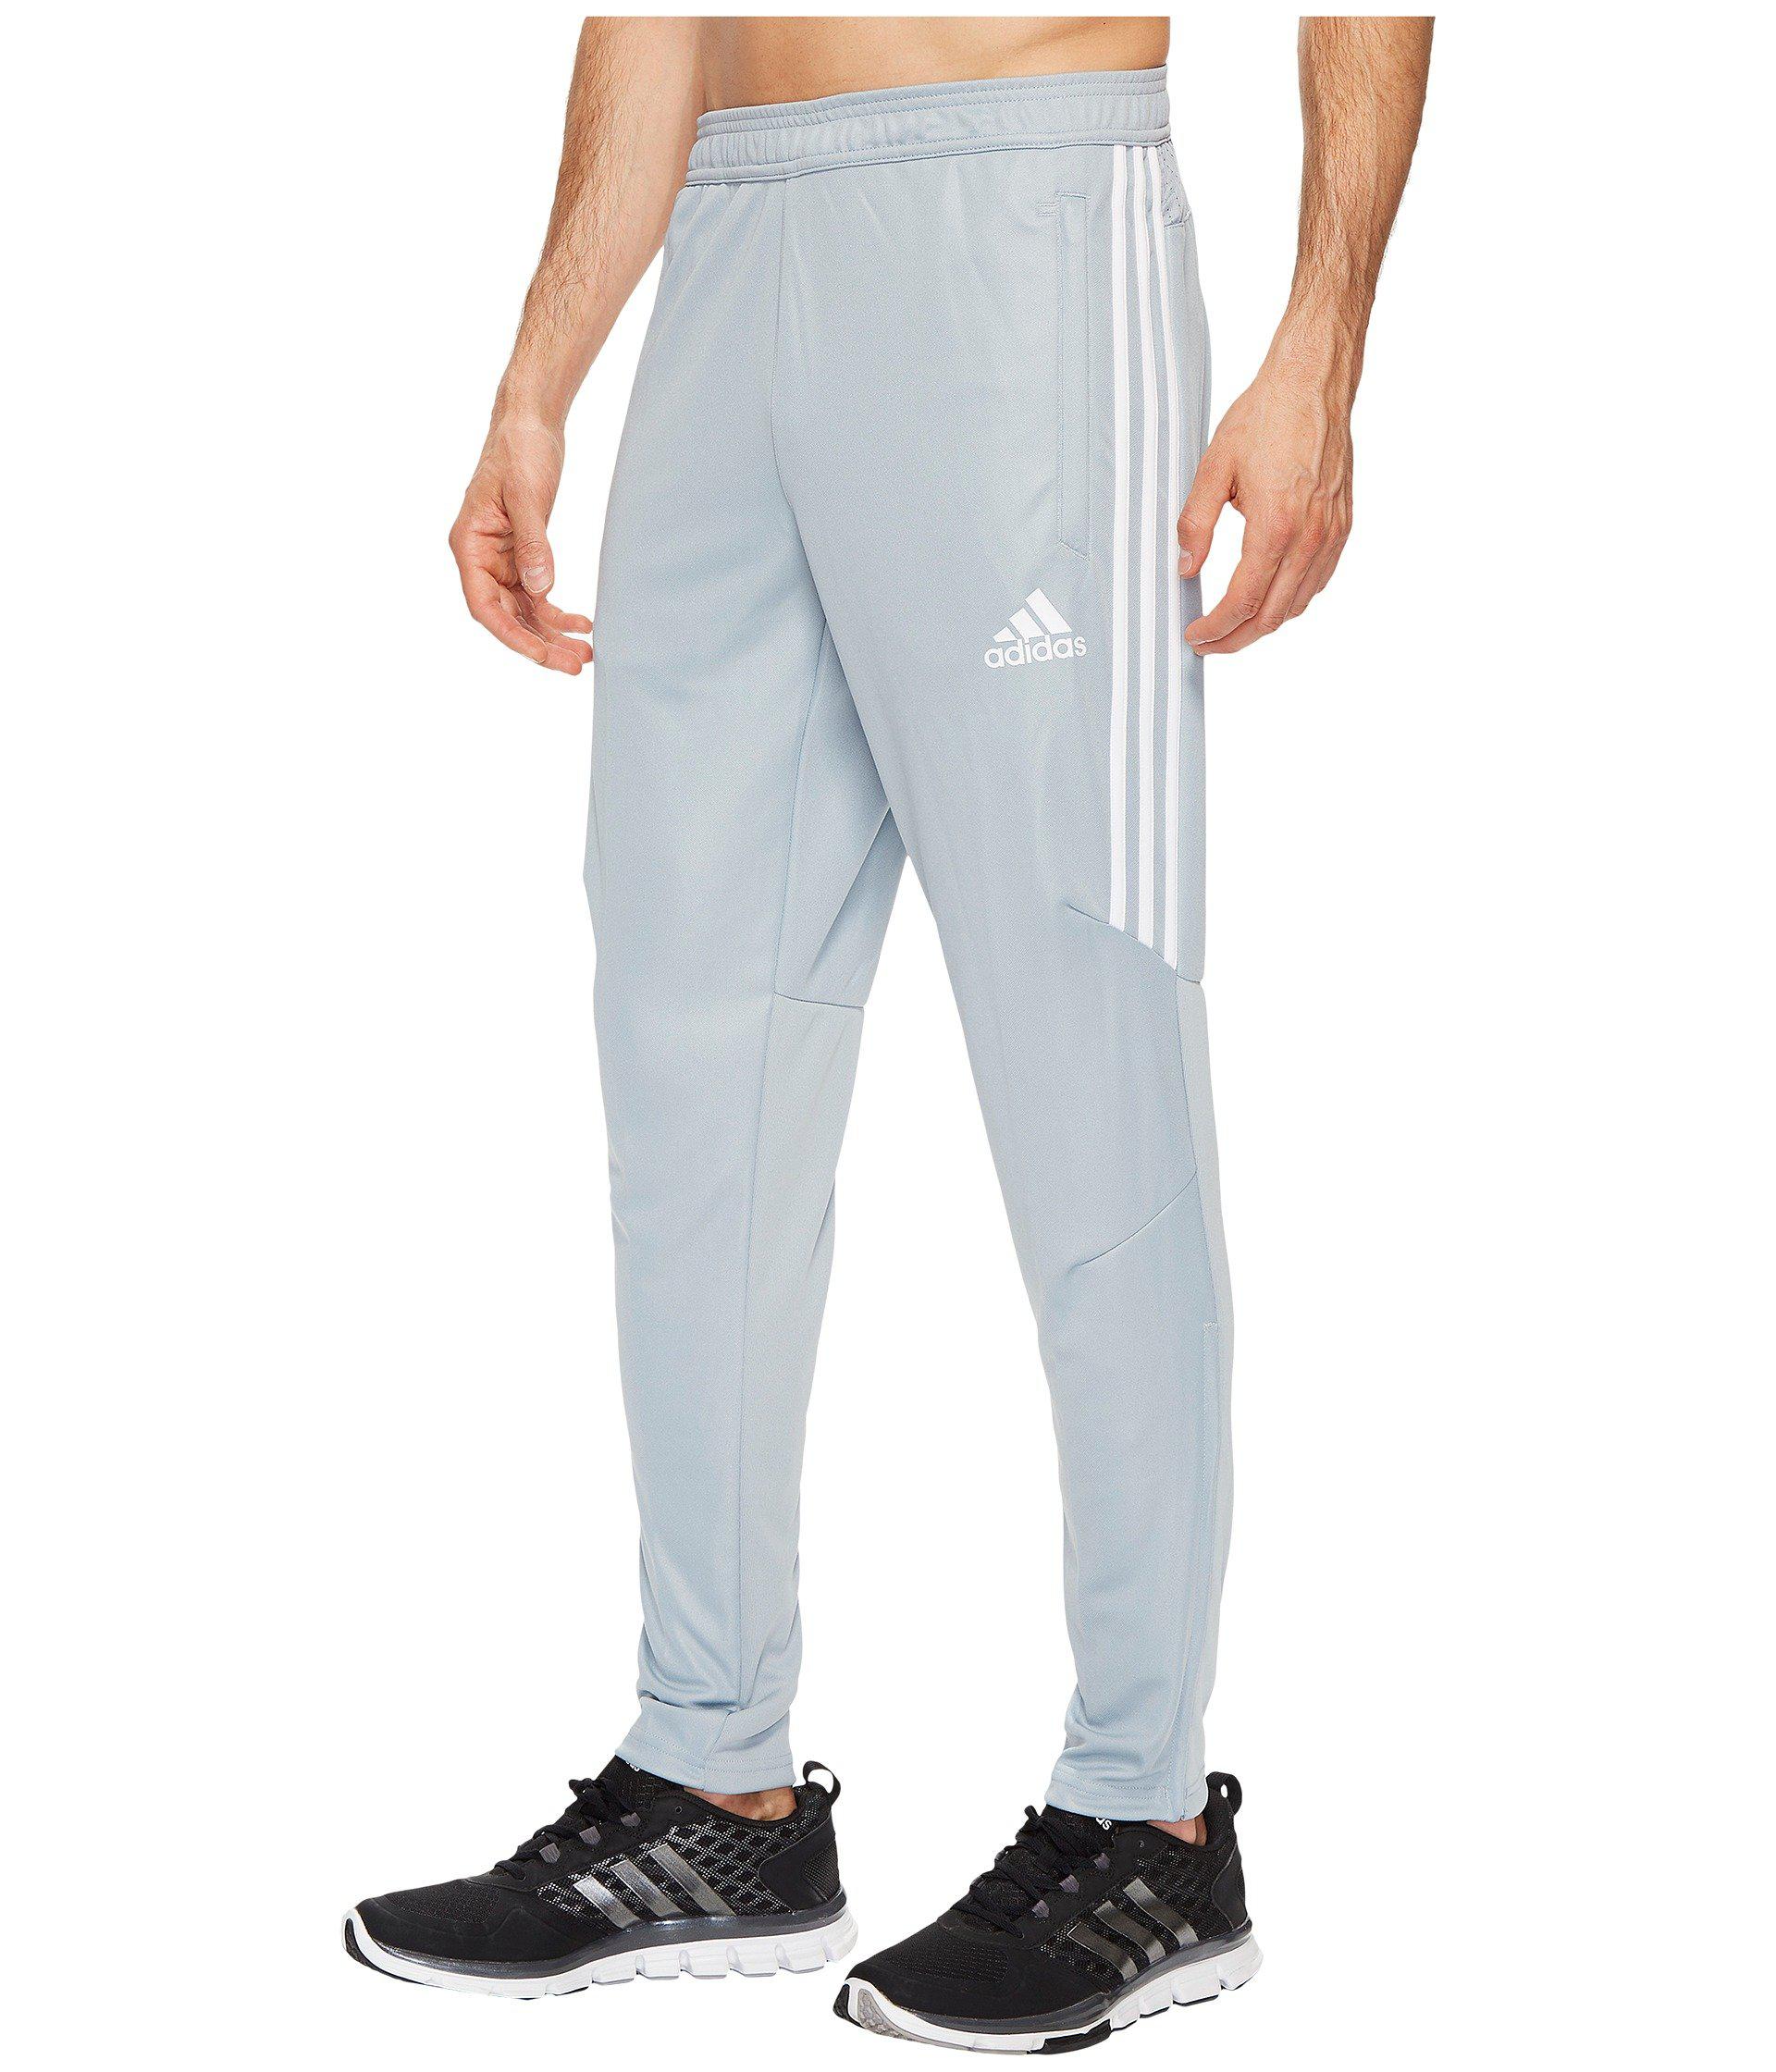 adidas Synthetic Tiro '17 Pants in Light Grey/White/White (Gray) for ...